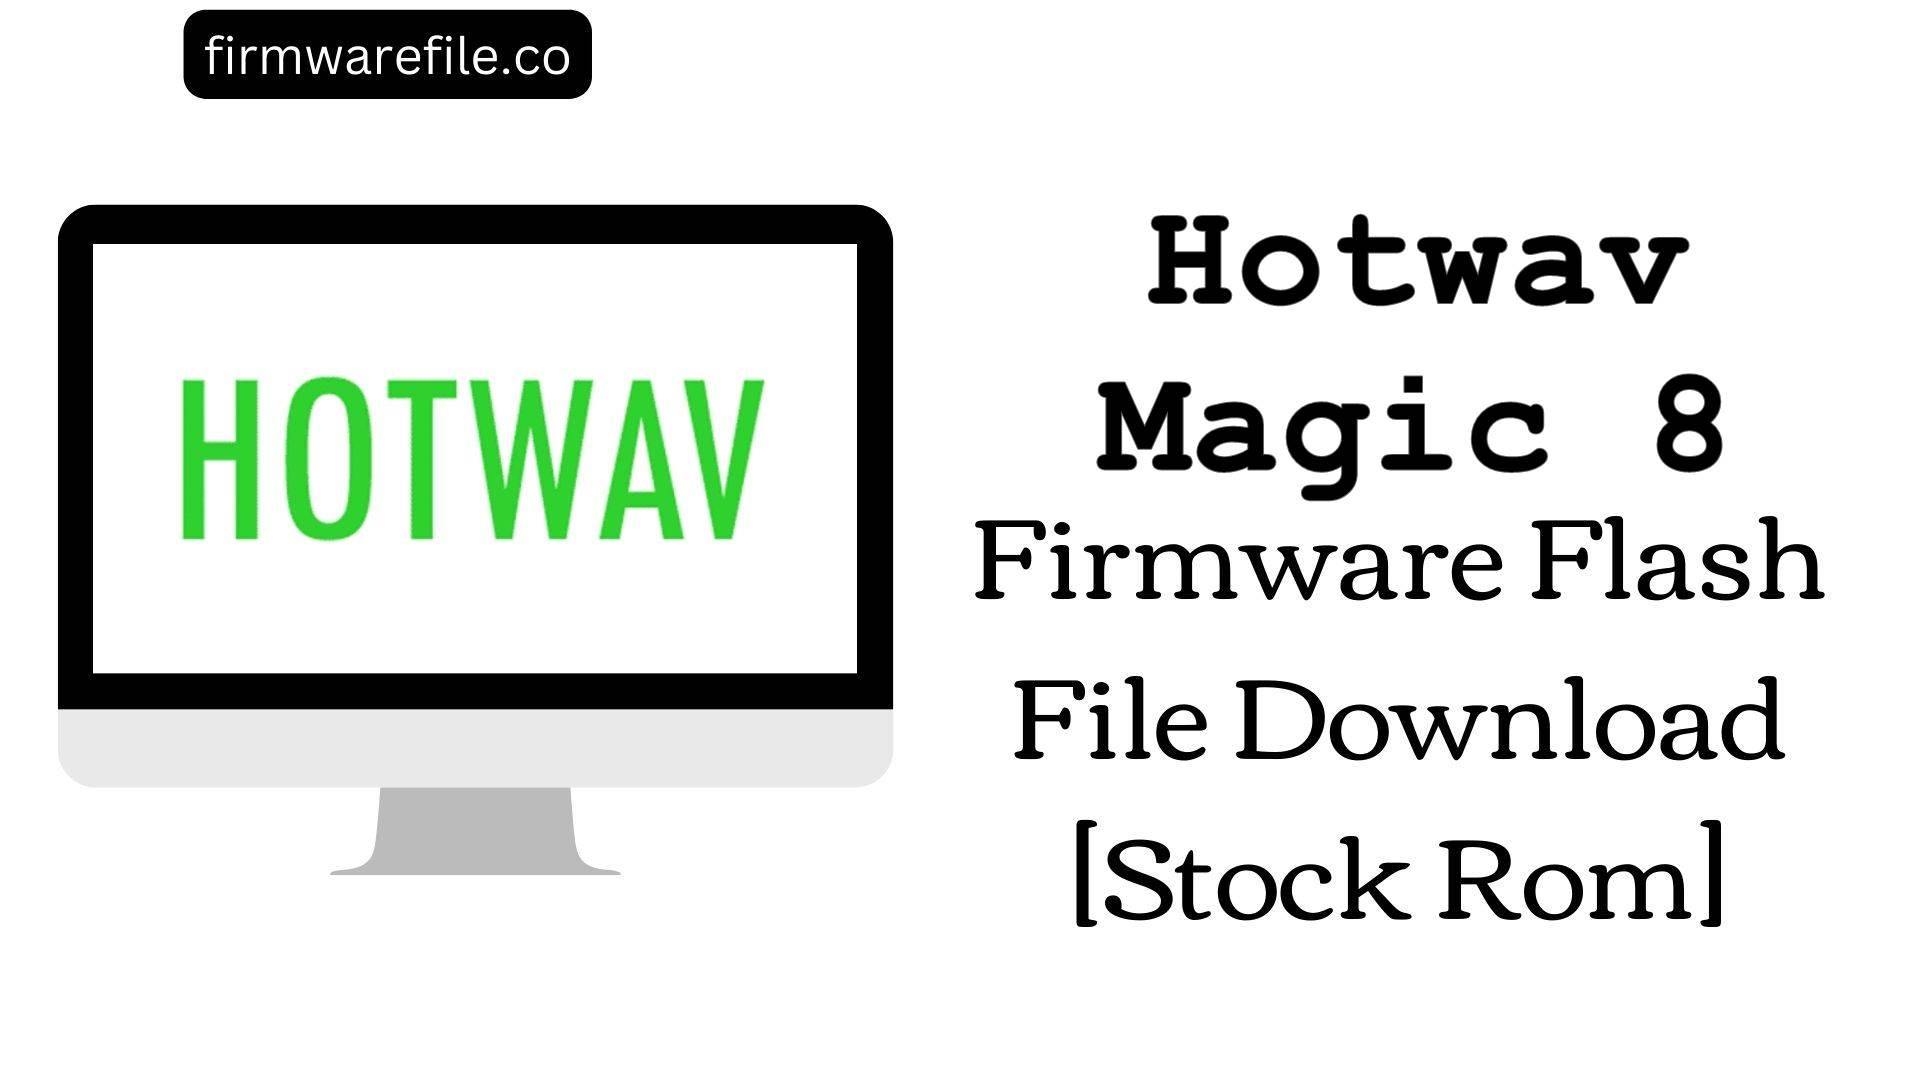 Hotwav Magic 8